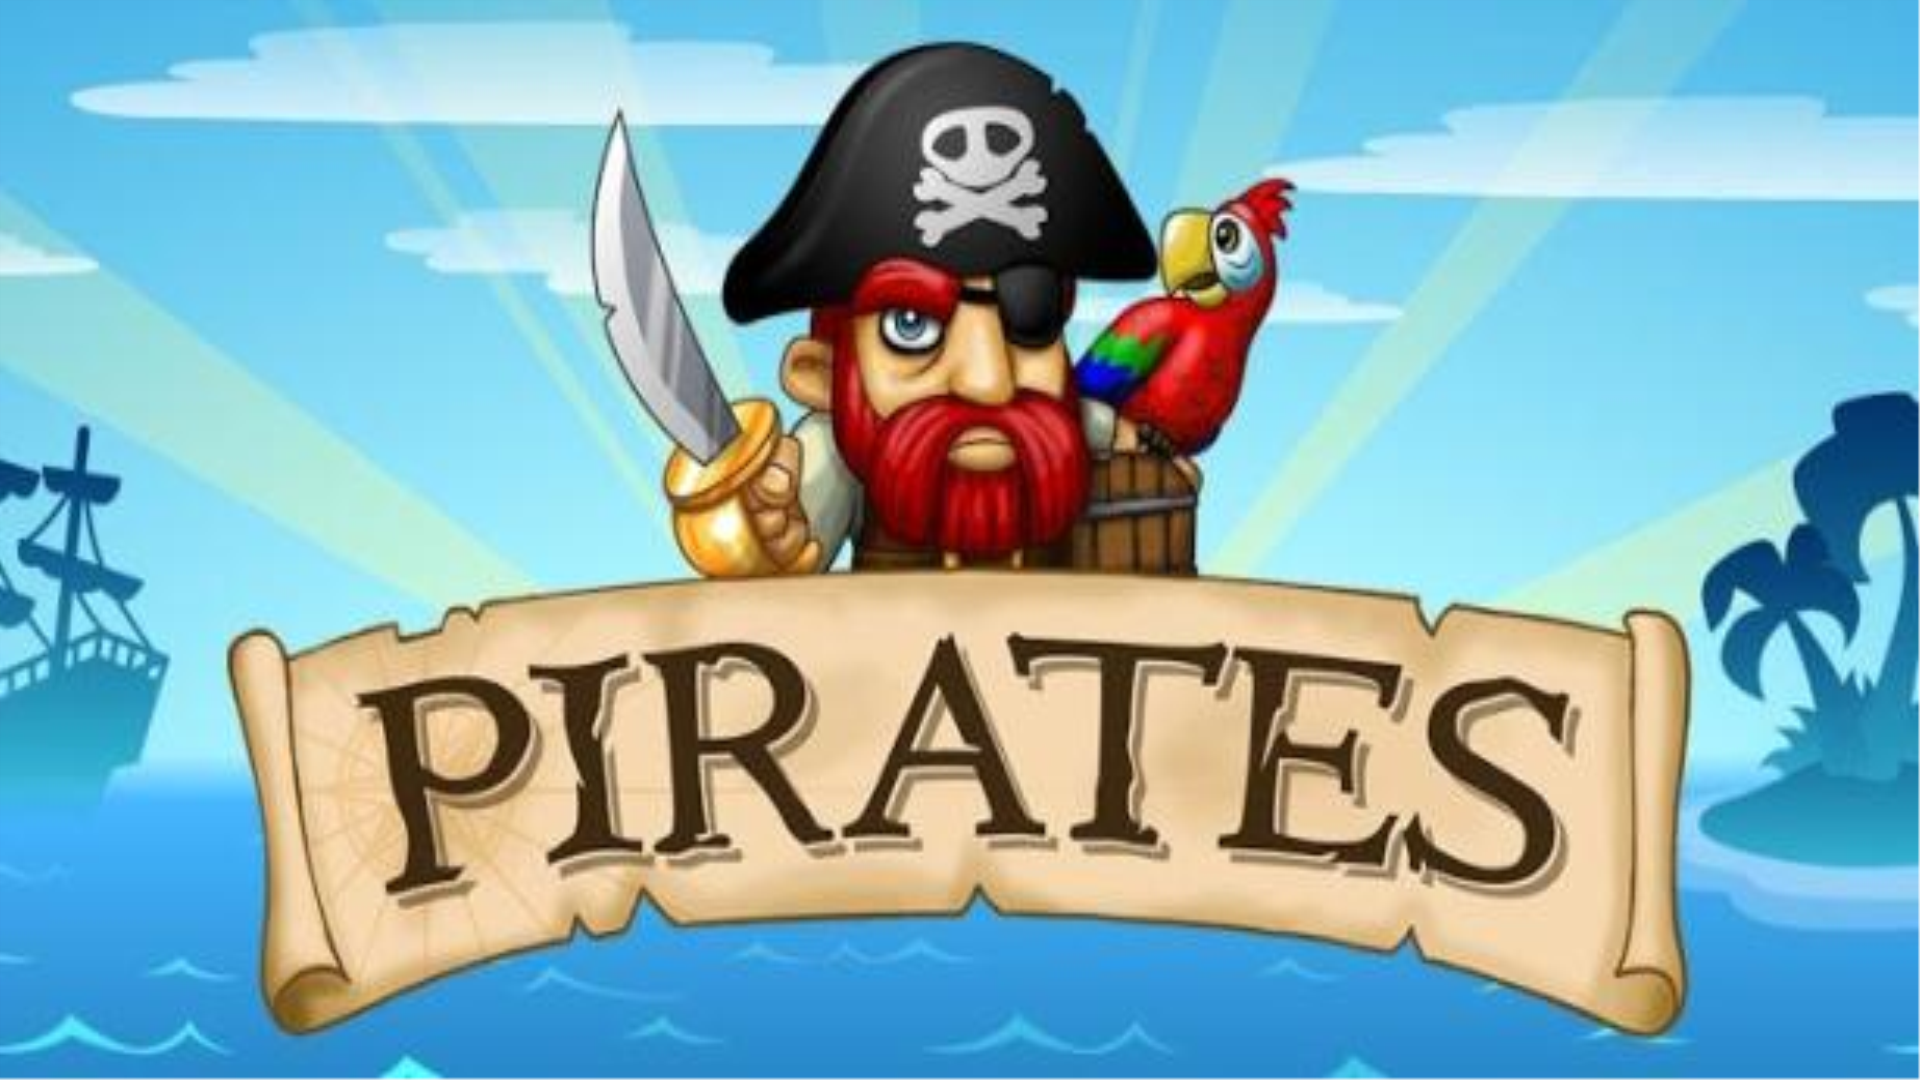 Pirates Pirates игра. Пираты на андроид. Пираты игра мобильная. Игра про пиратов на Android. Одна игра пират